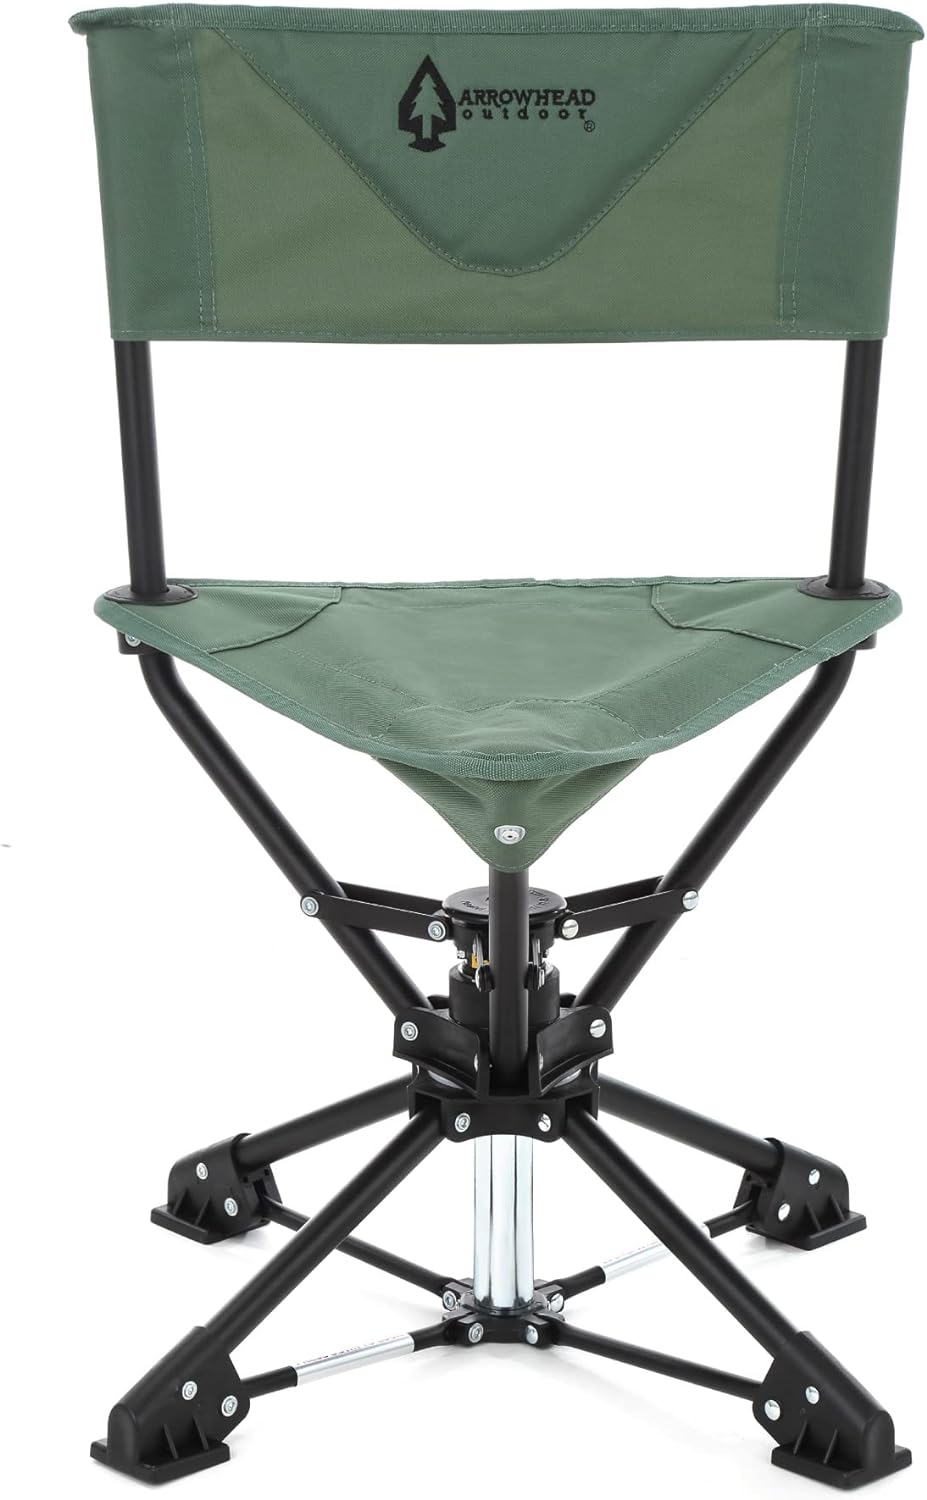 360° Degree Swivel Hunting Chair Stool Seat